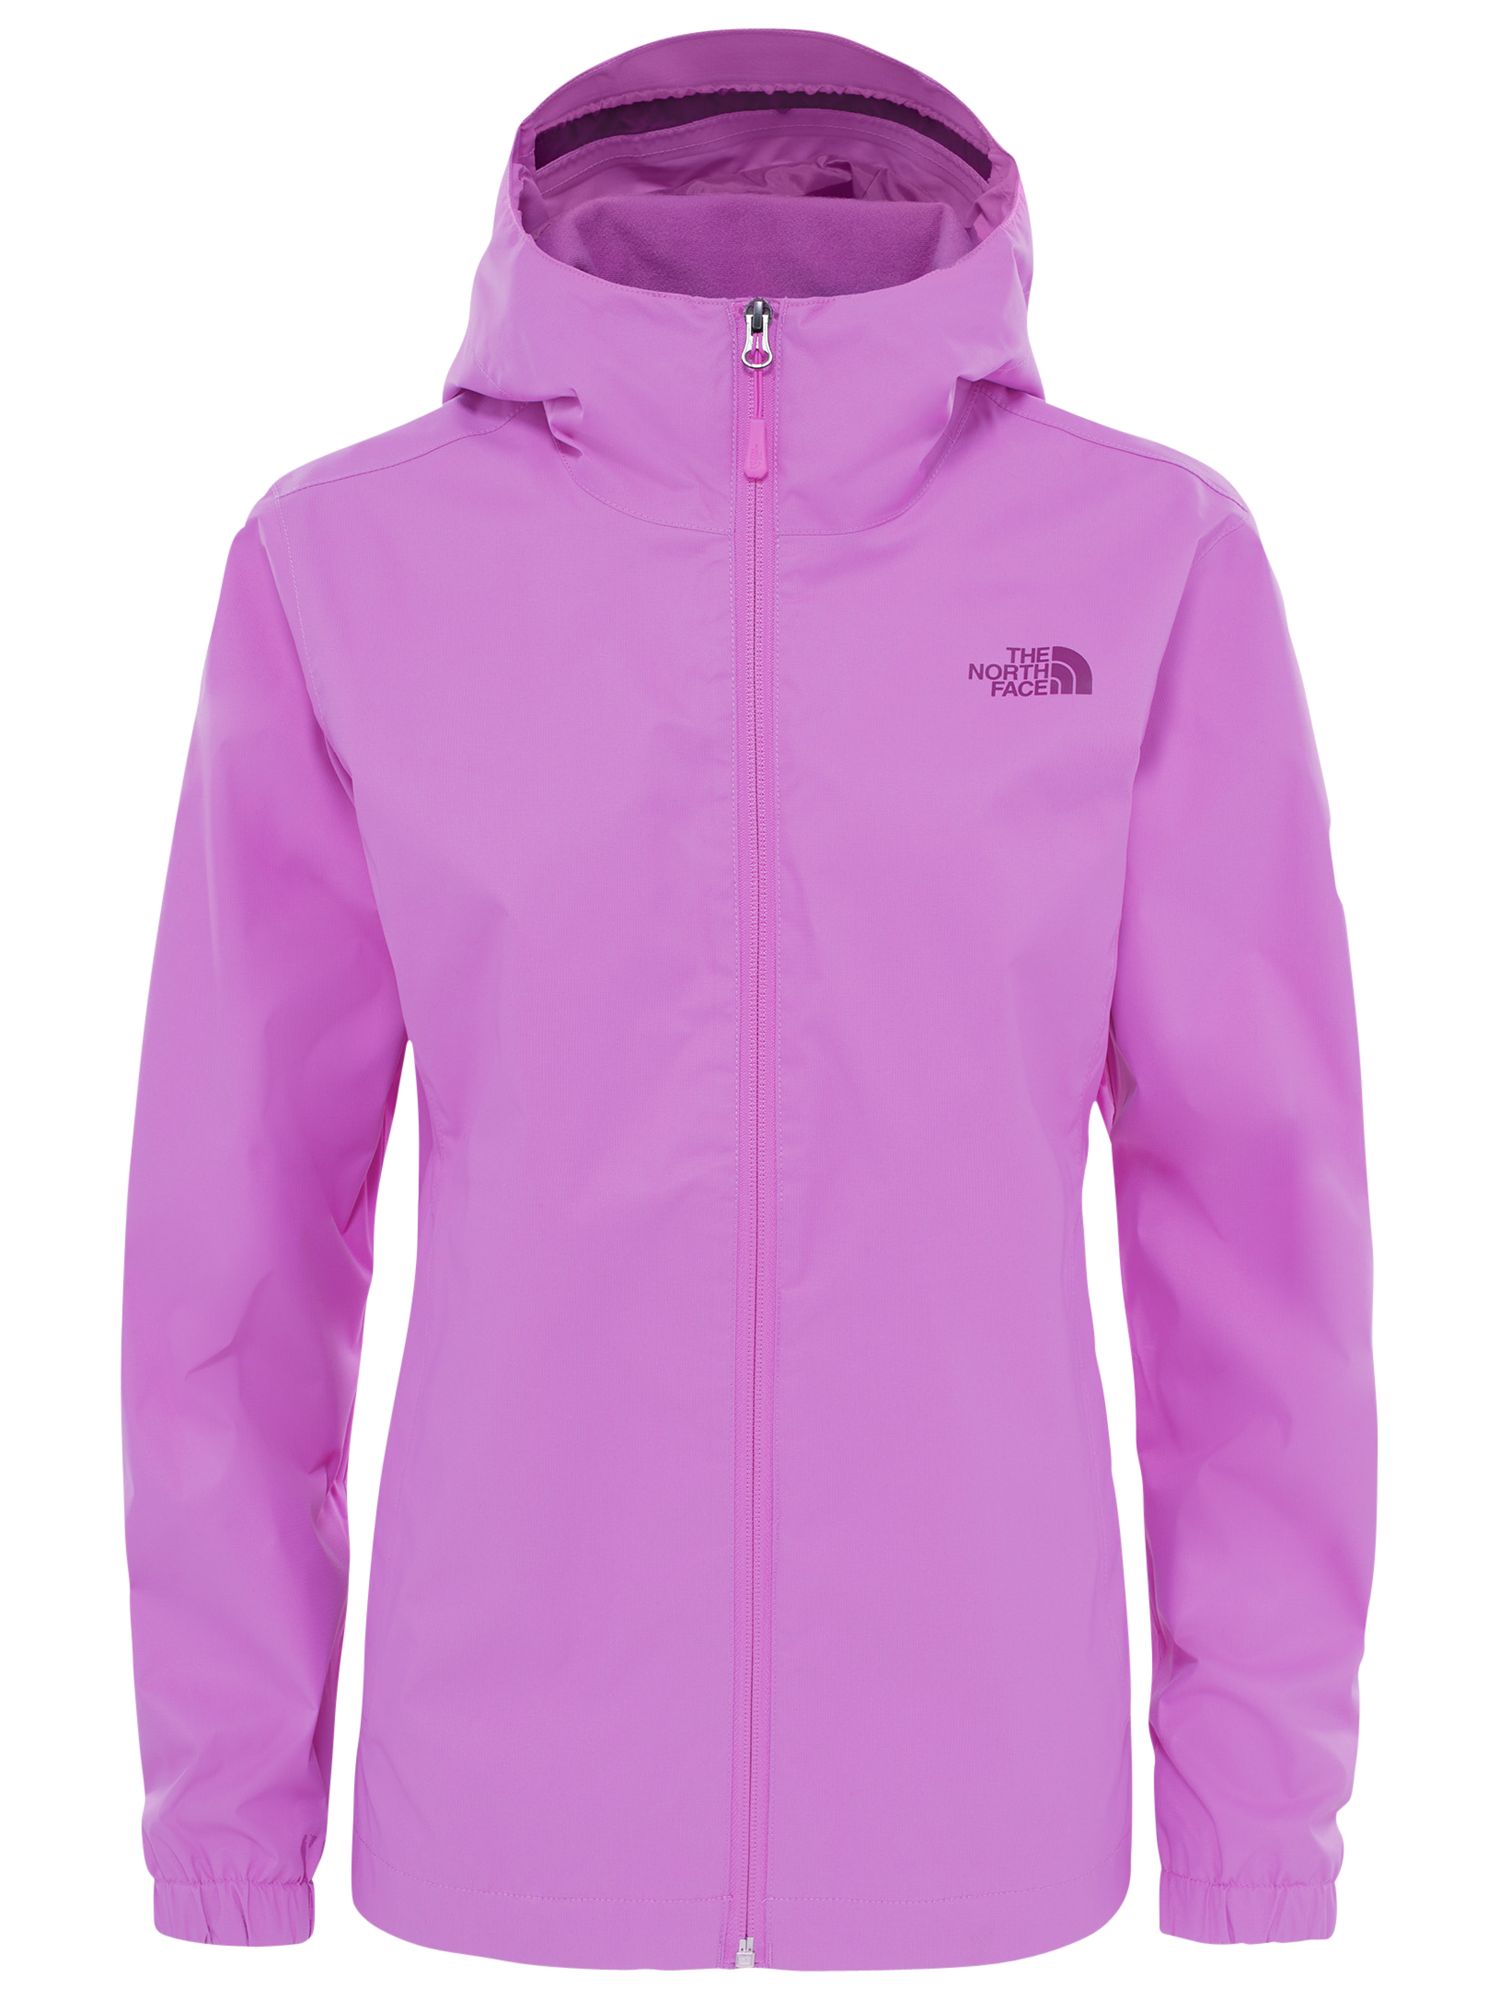 The North Face Quest Waterproof Women's Jacket, Purple, S